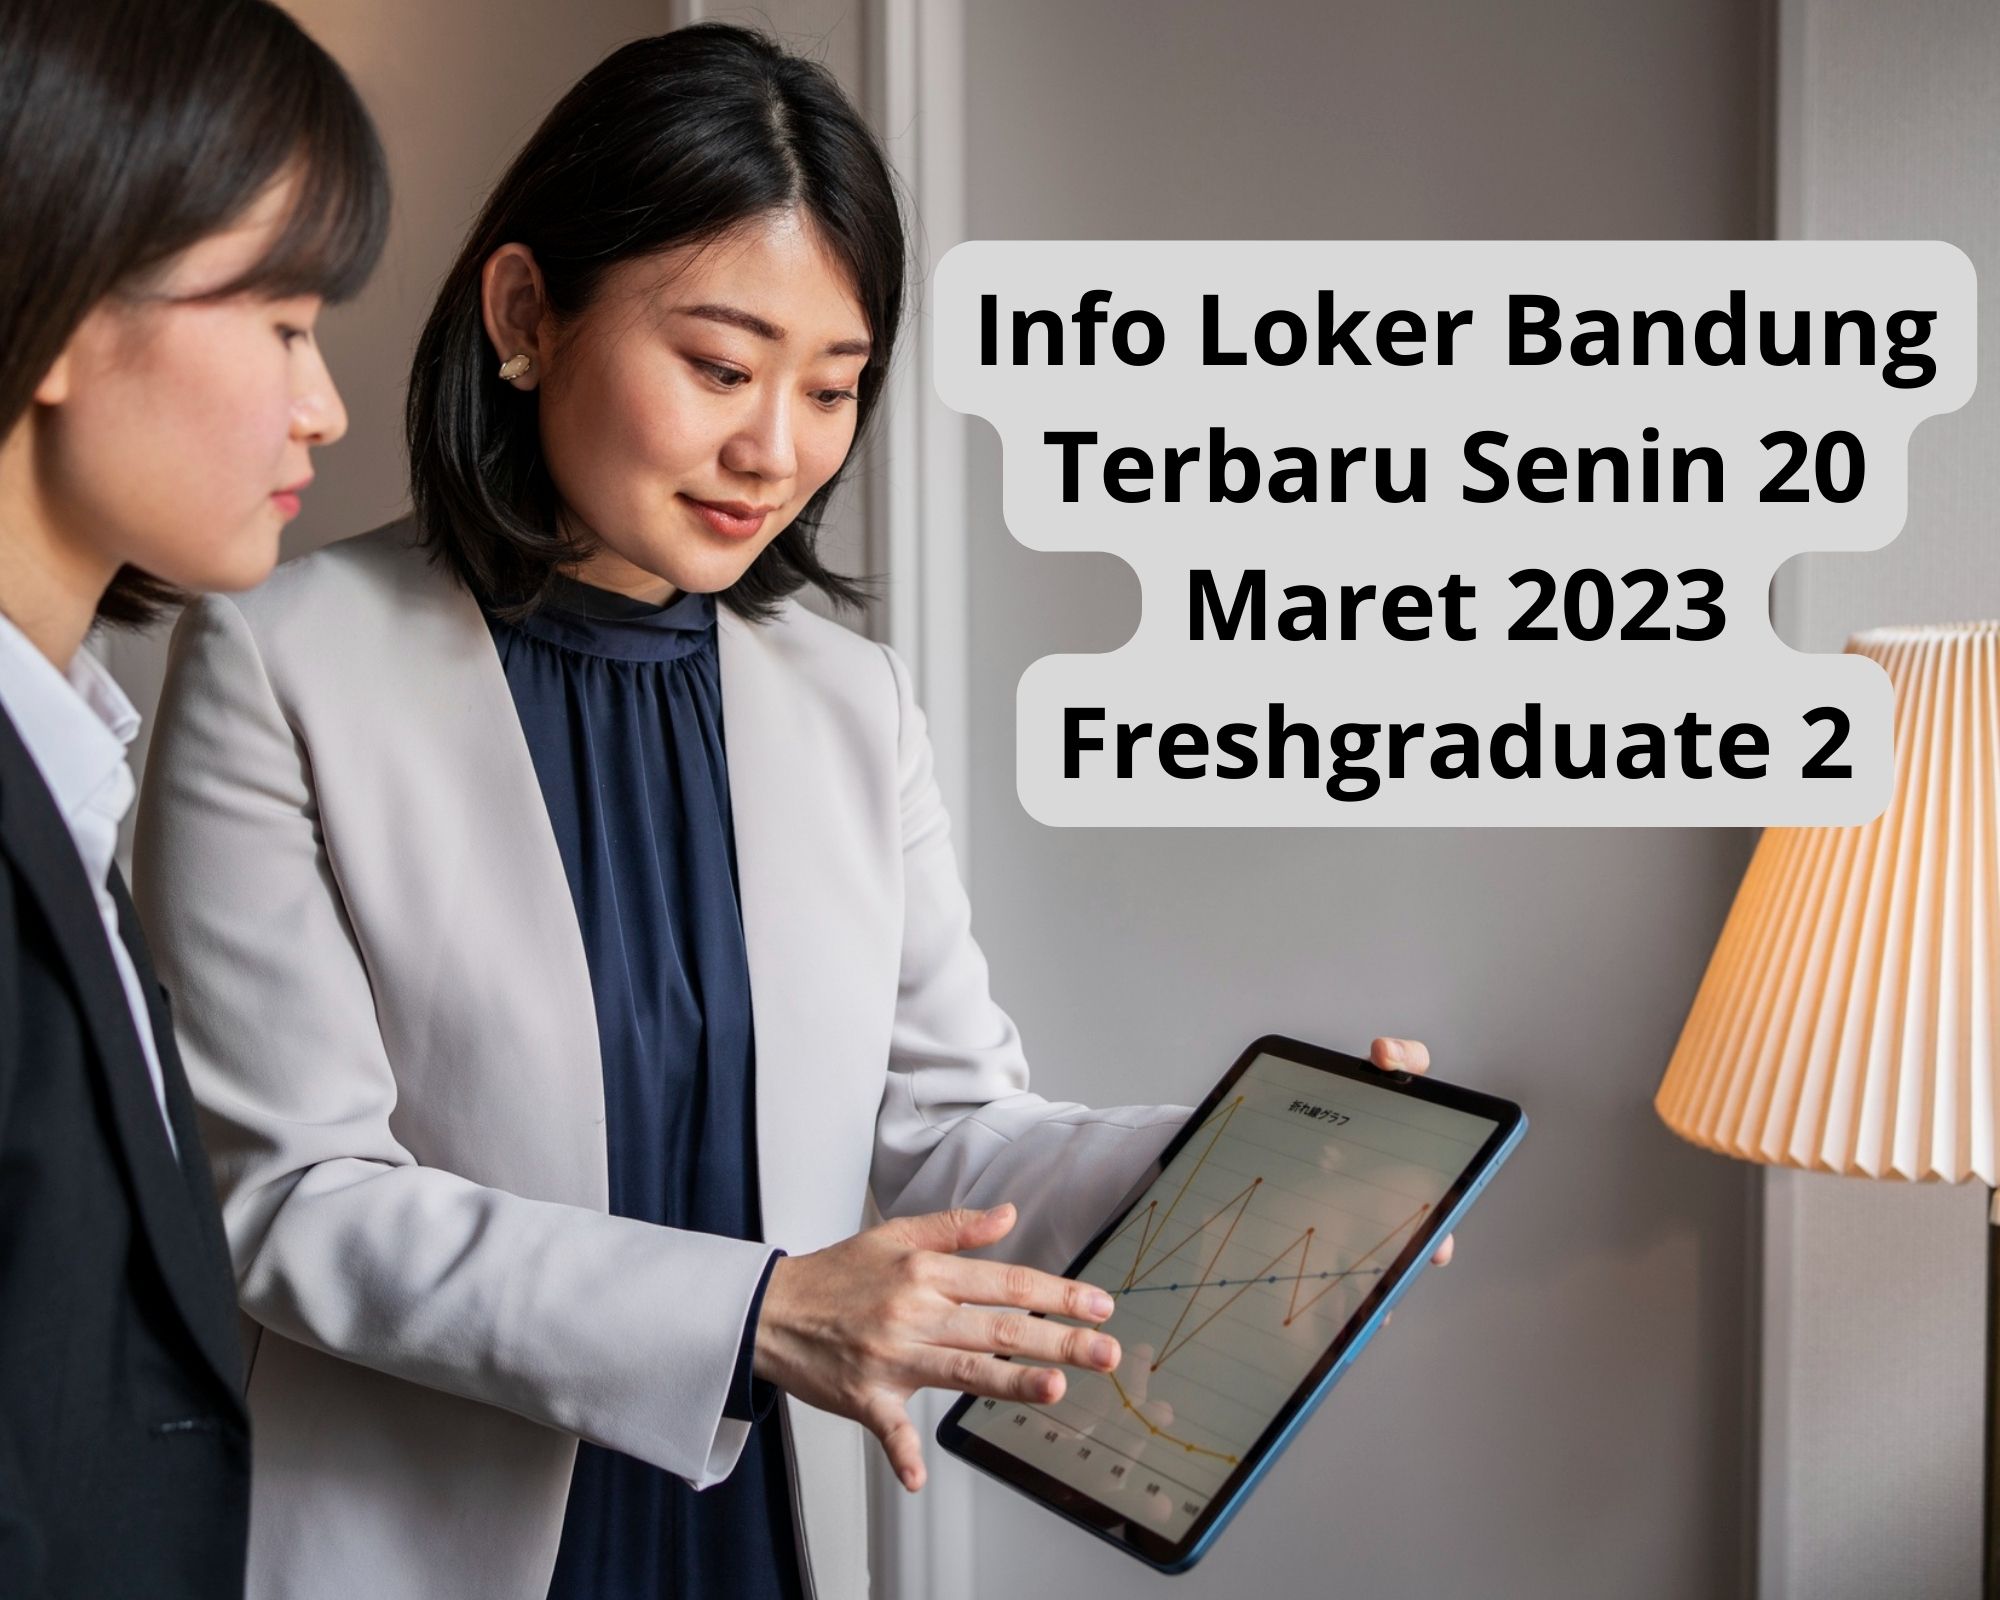 Info Loker Bandung Terbaru Senin 20 Maret 2023 Freshgraduate 2